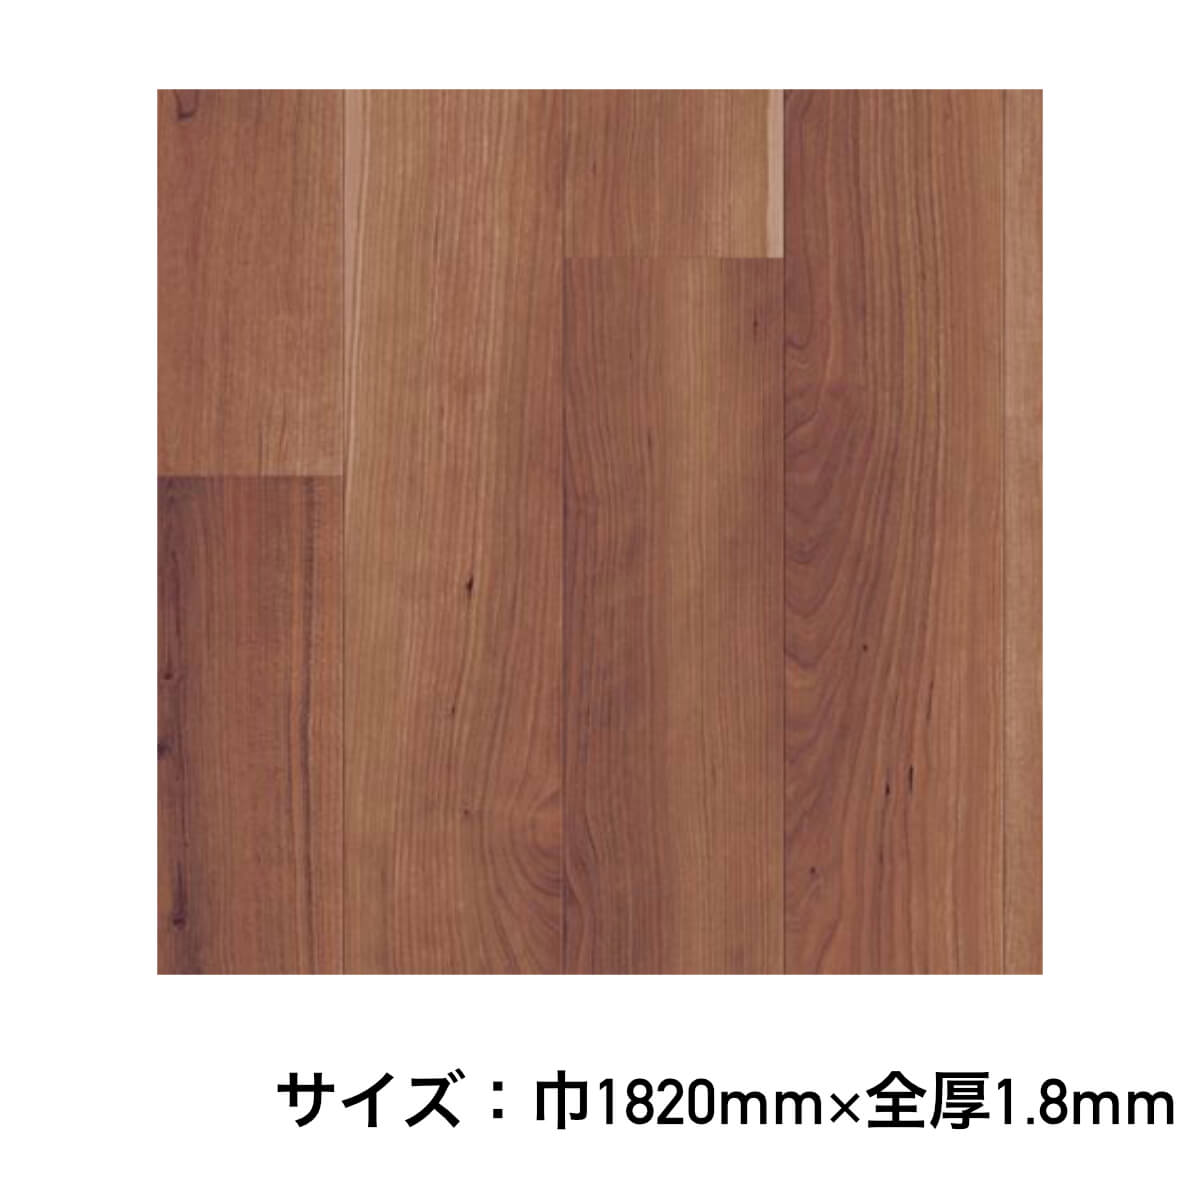 DIY FACTORY ONLINE ホルダ-THC14232 E16X-SVUBR11-25A SHOP京セラ